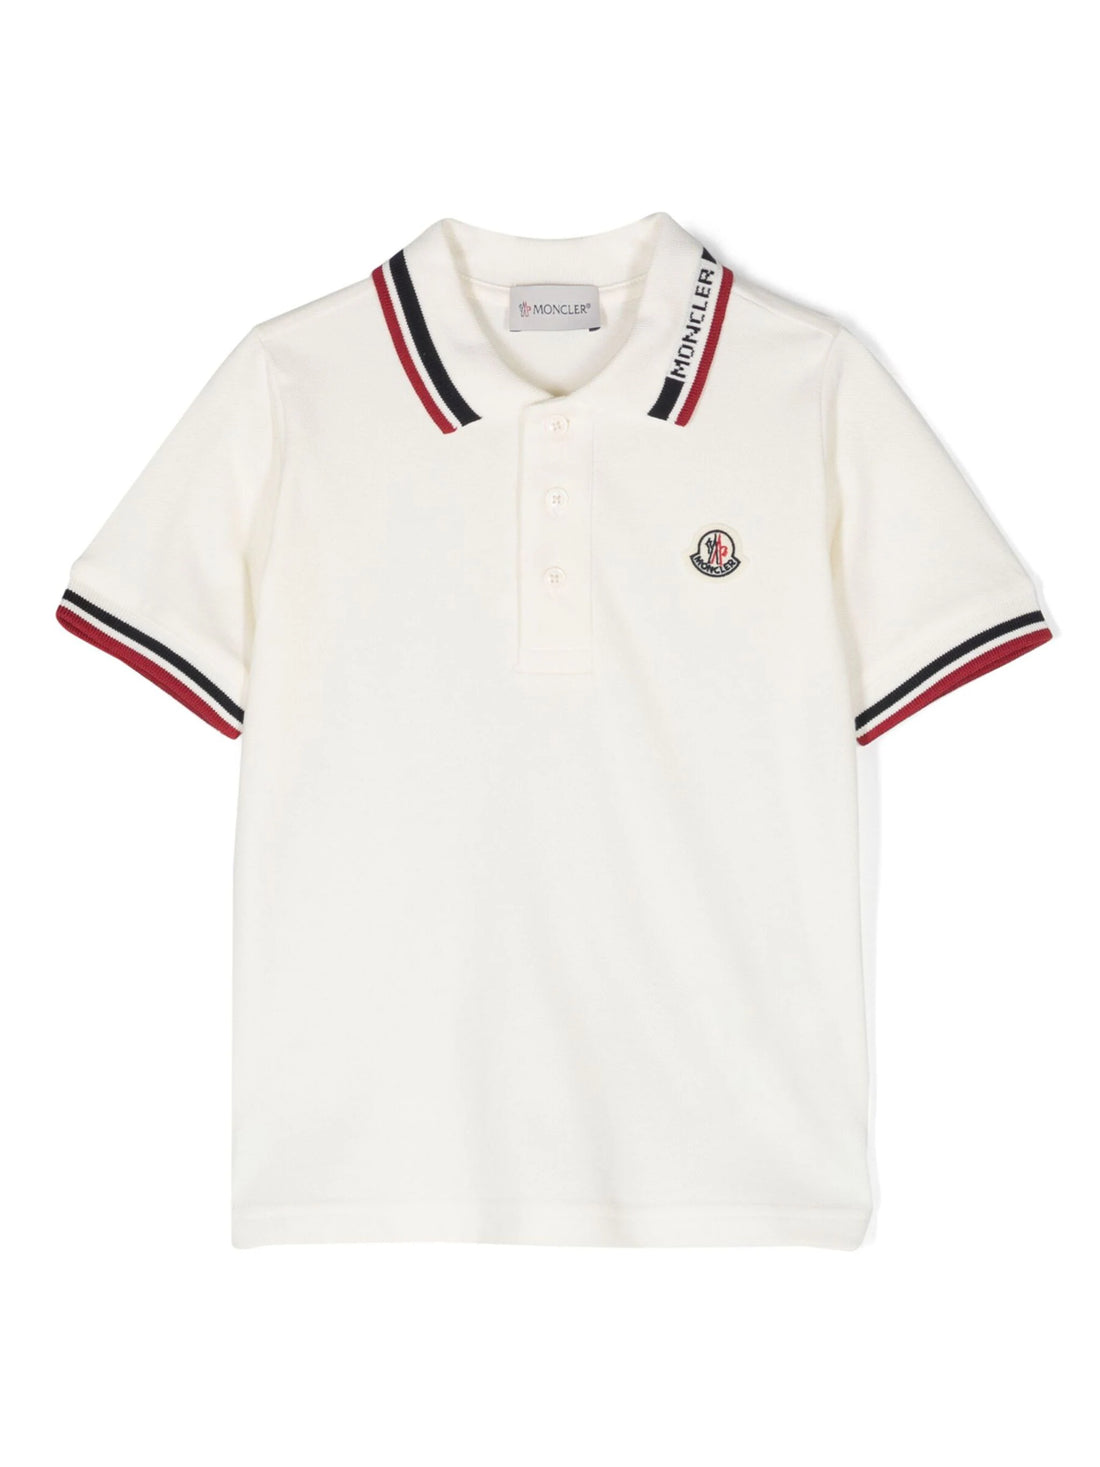 MONCLER KIDS Boys Logo Appliqué Tricolour Trim Polo Shirt White